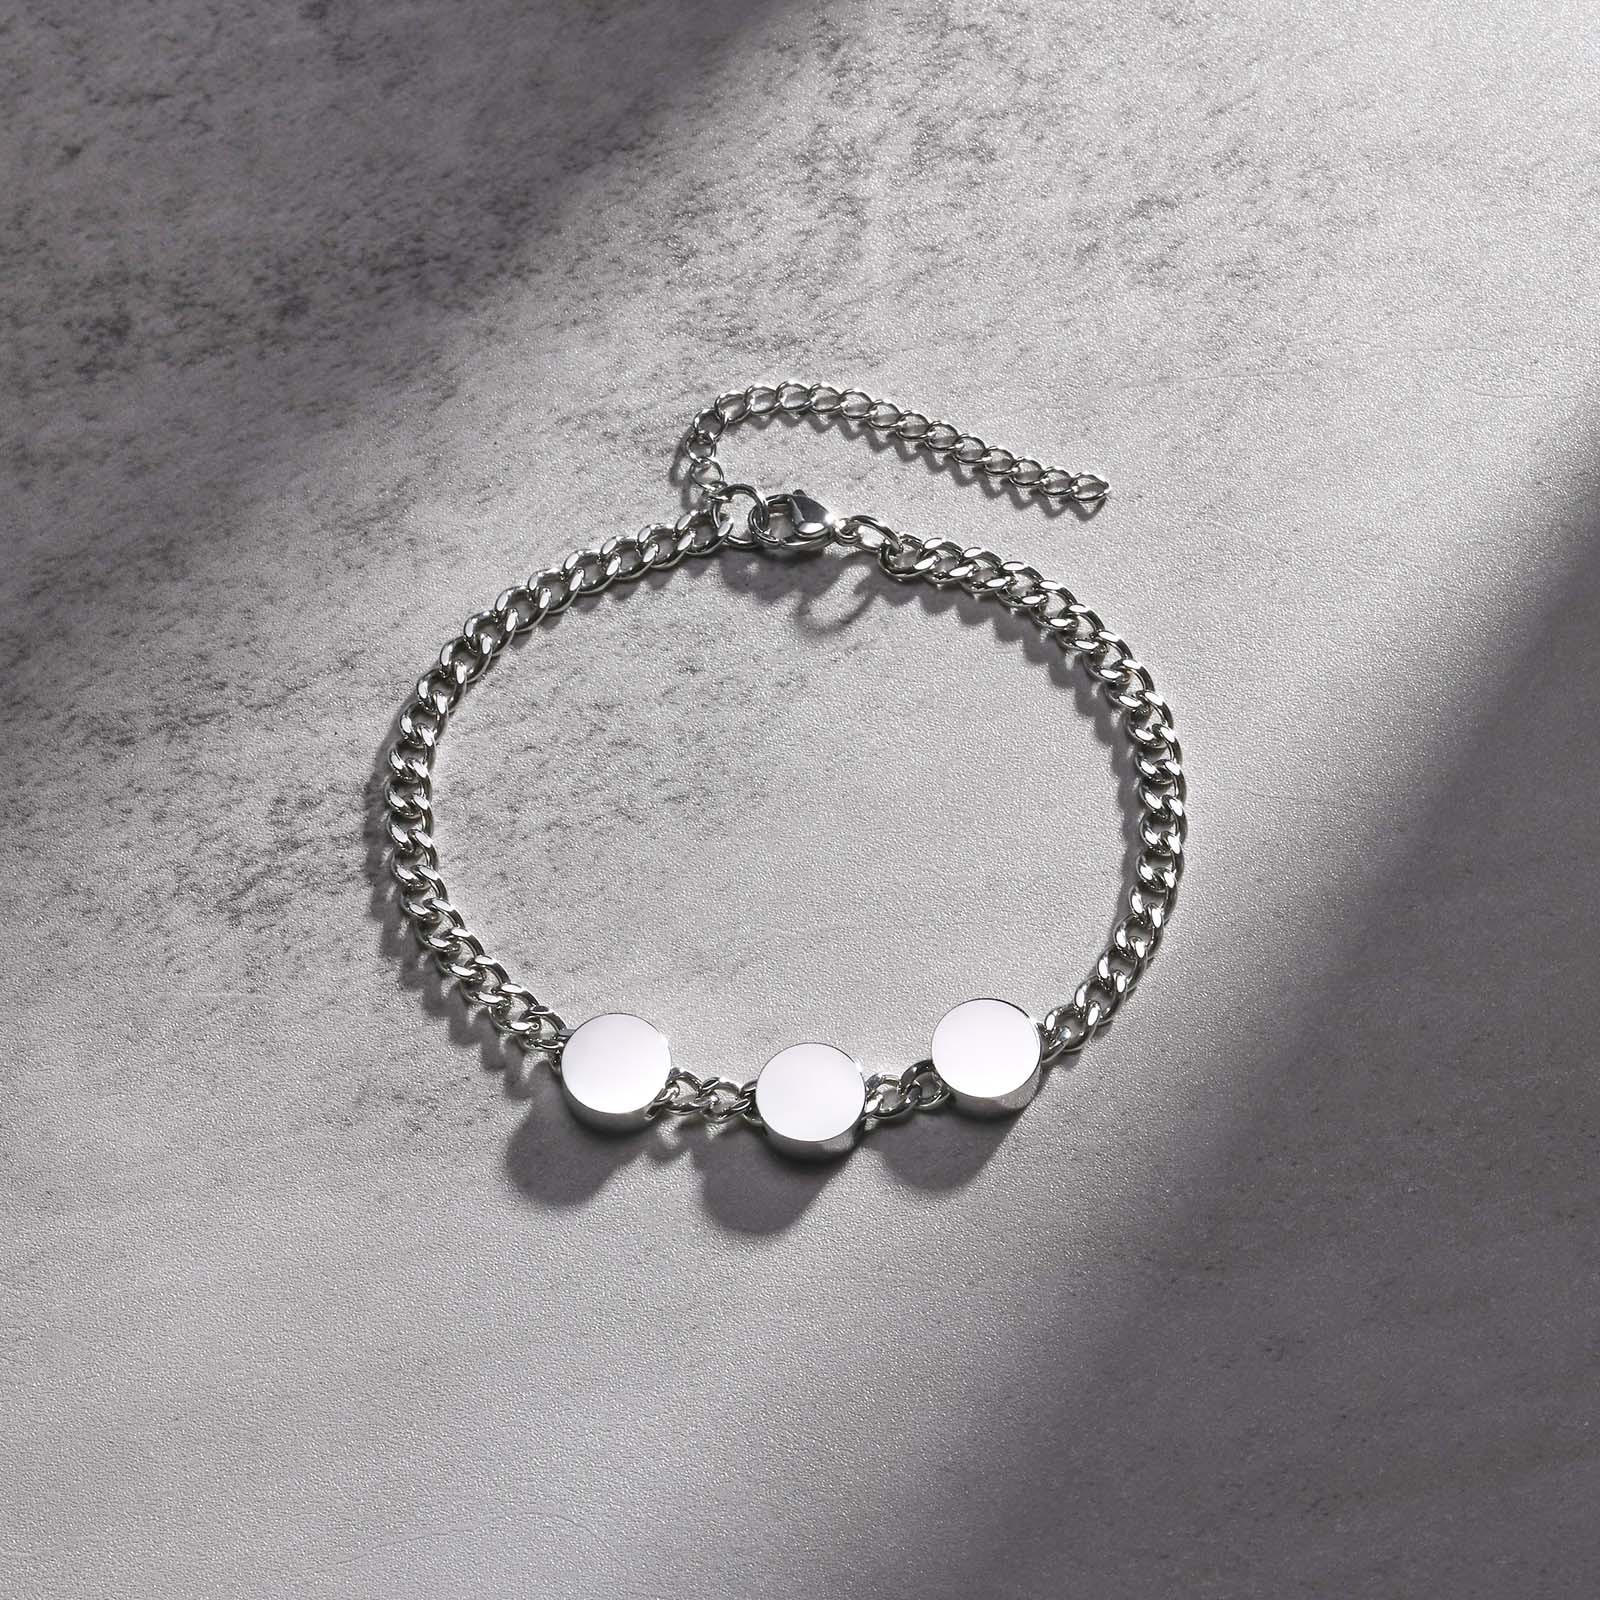 3 accessory [blank] bracelet